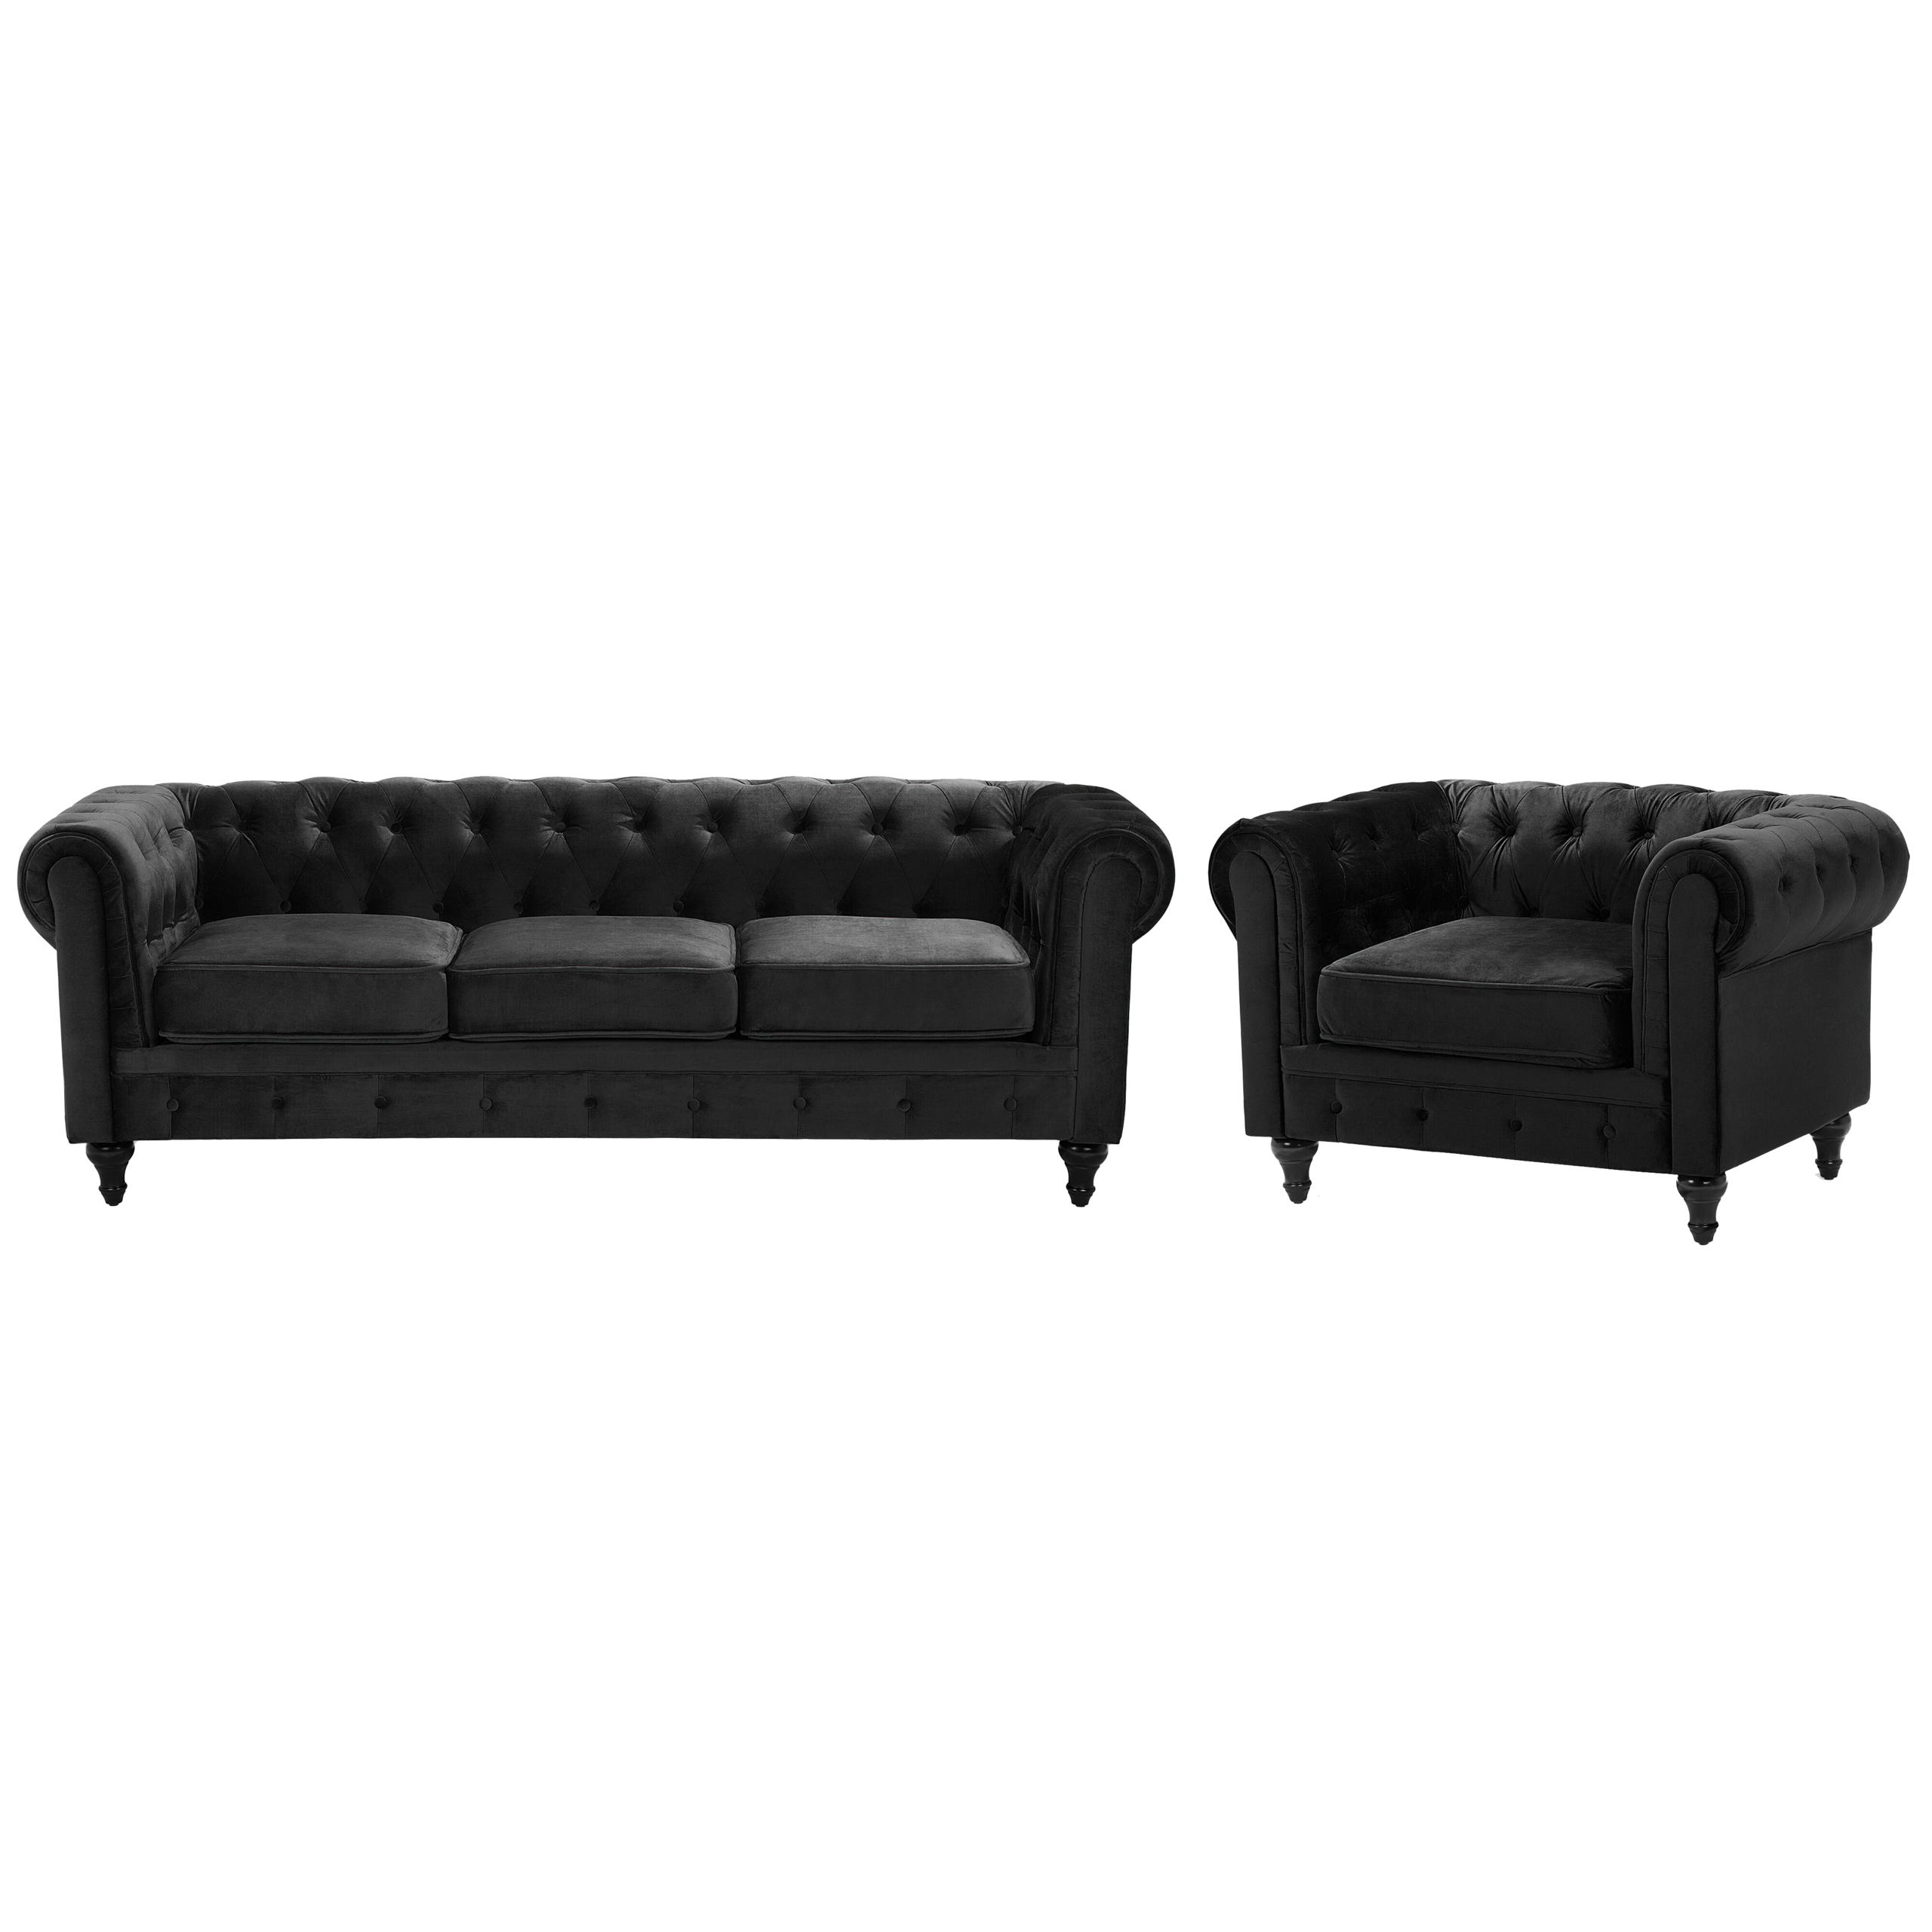 Beliani Chesterfield Living Room Set Black Velvet Fabric Upholstery Dark Wood Legs 3 Seater Sofa + Armchair Contemporary